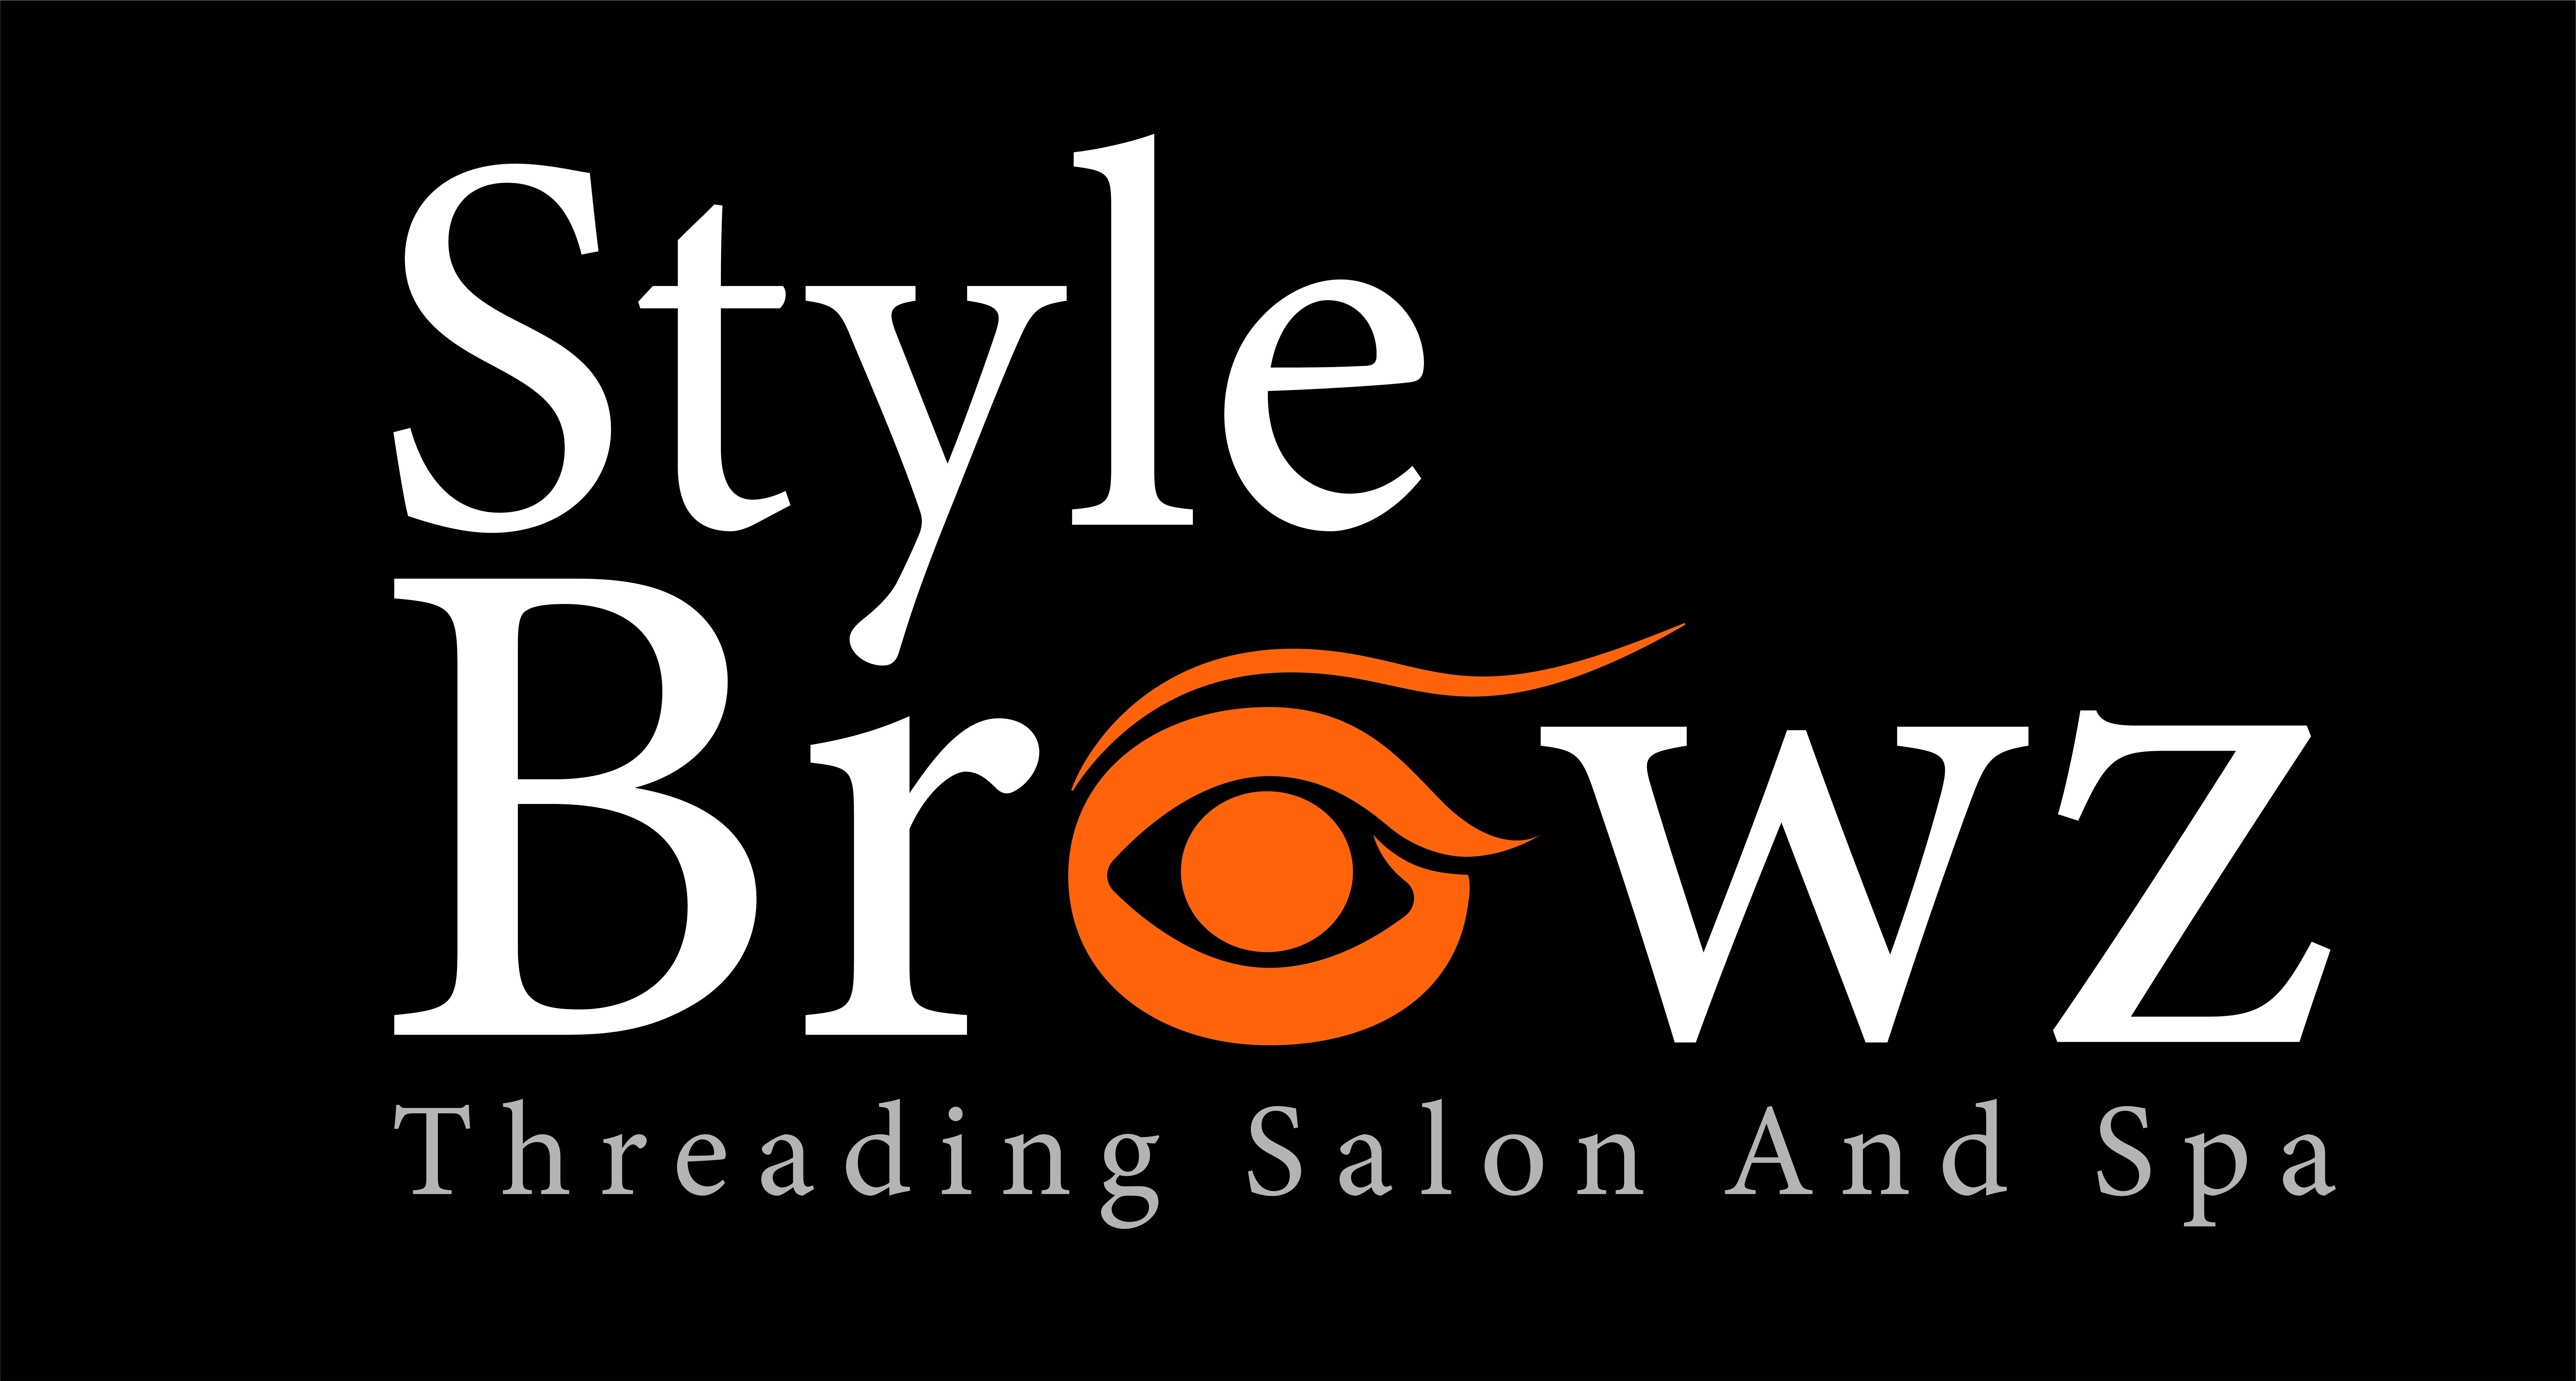 Browz Logo - Style Browz - Threading Salon And Spa